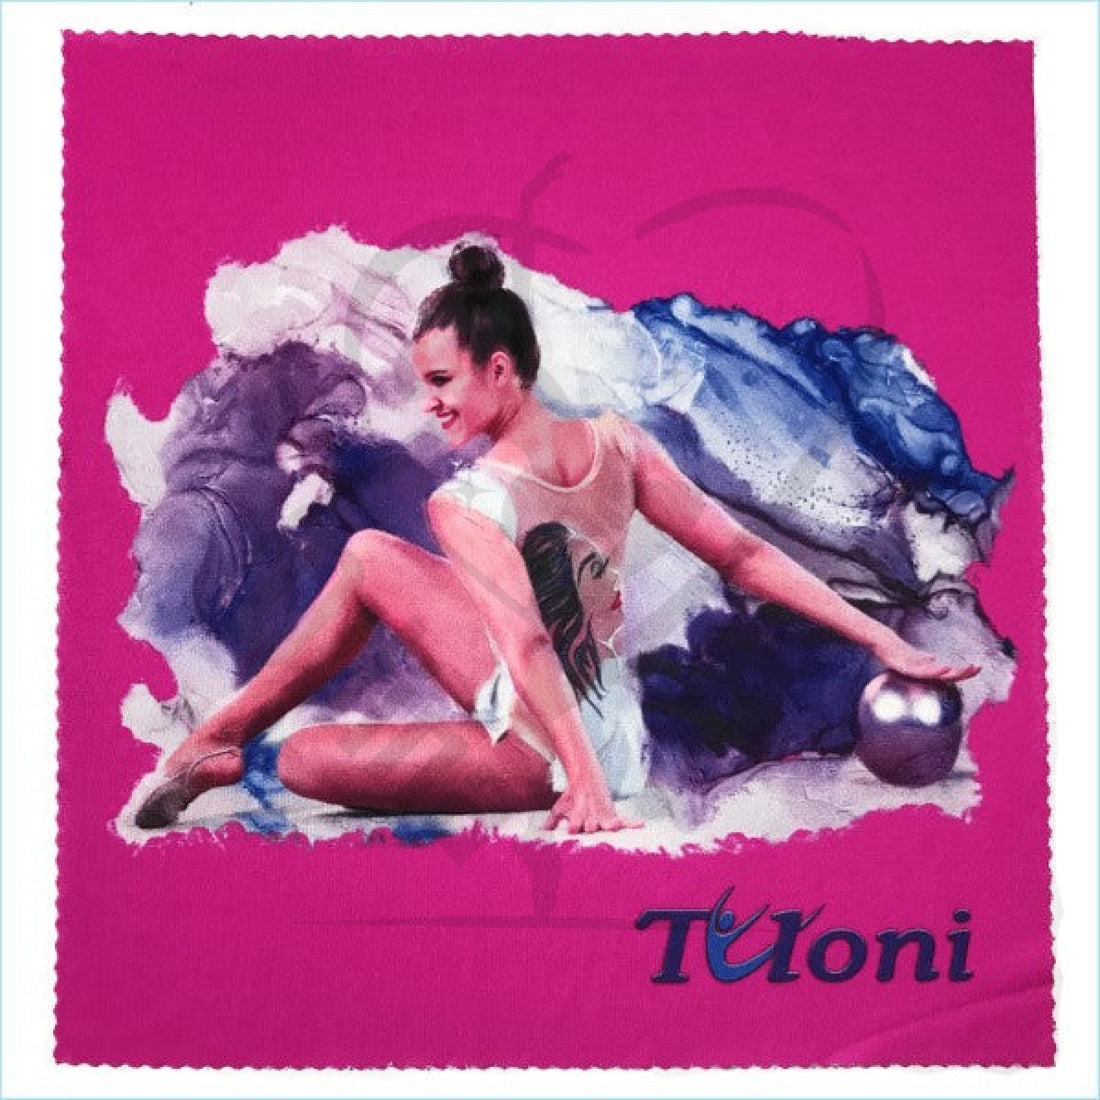 Tuloni Towel For Balls 30*30 / Fuchsia (Tow01-Fu) Accessories